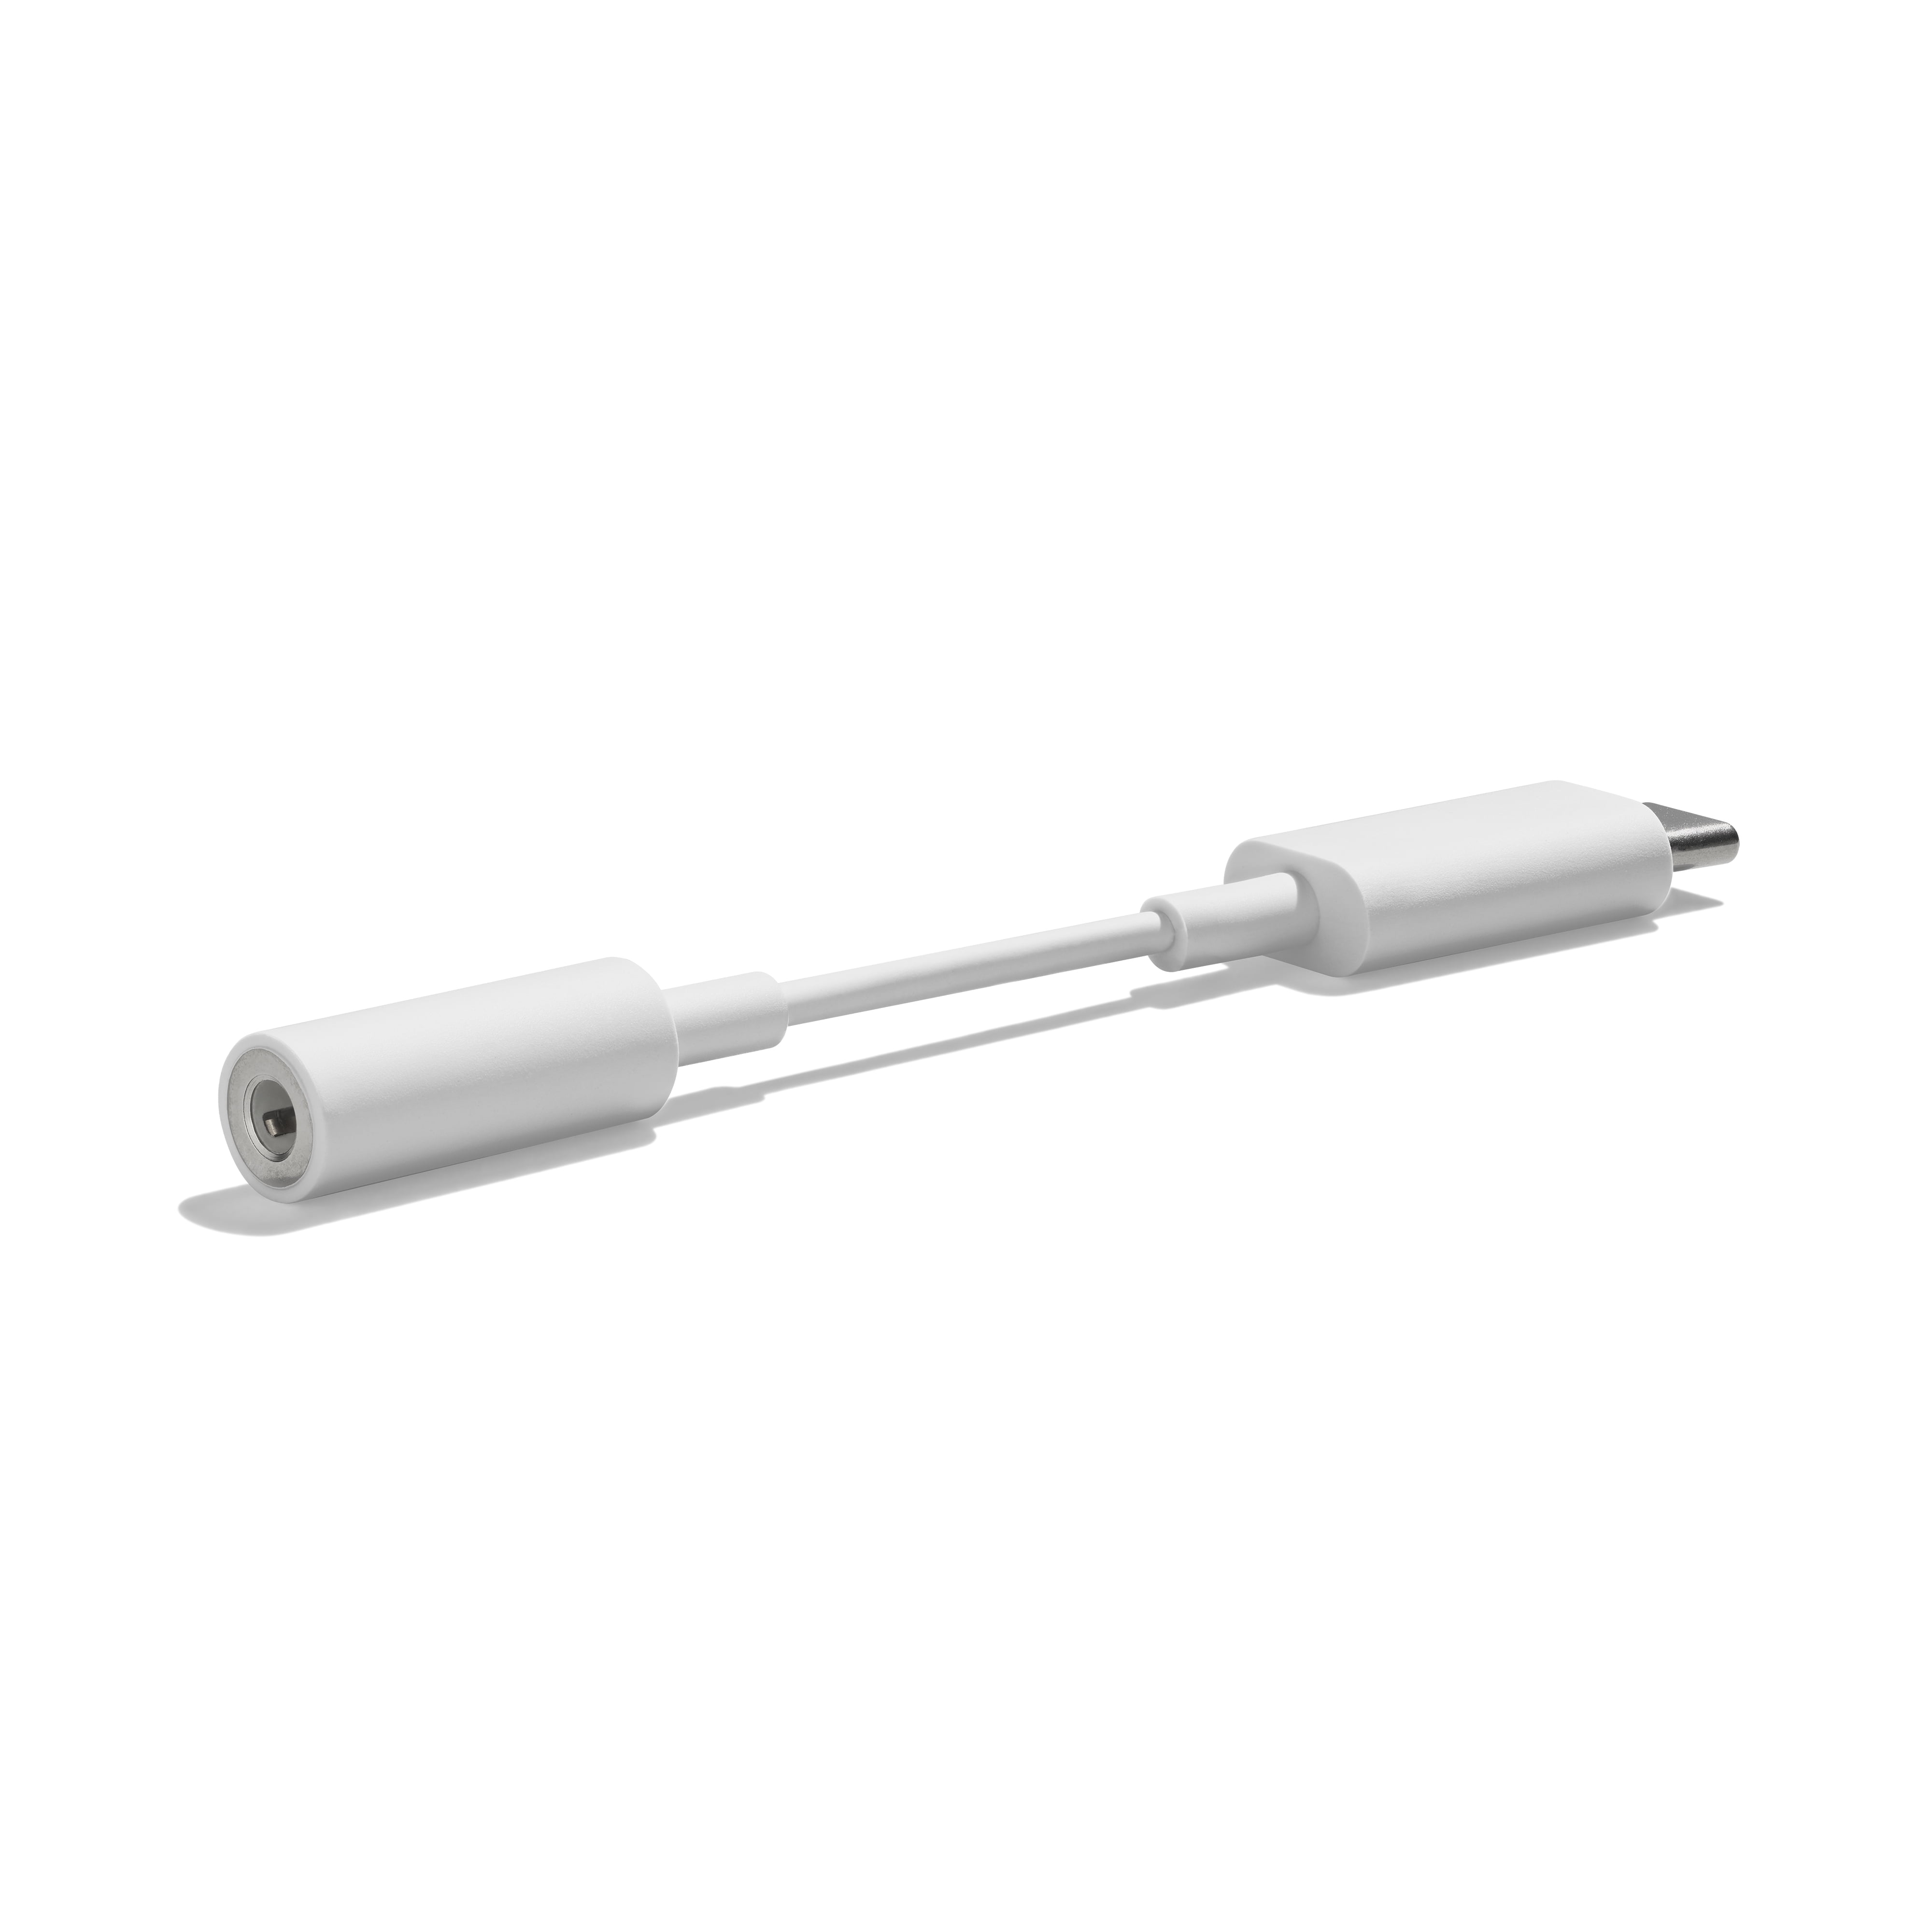 UGreen iPhone Lightning 3.5mm Adapter - User Review 